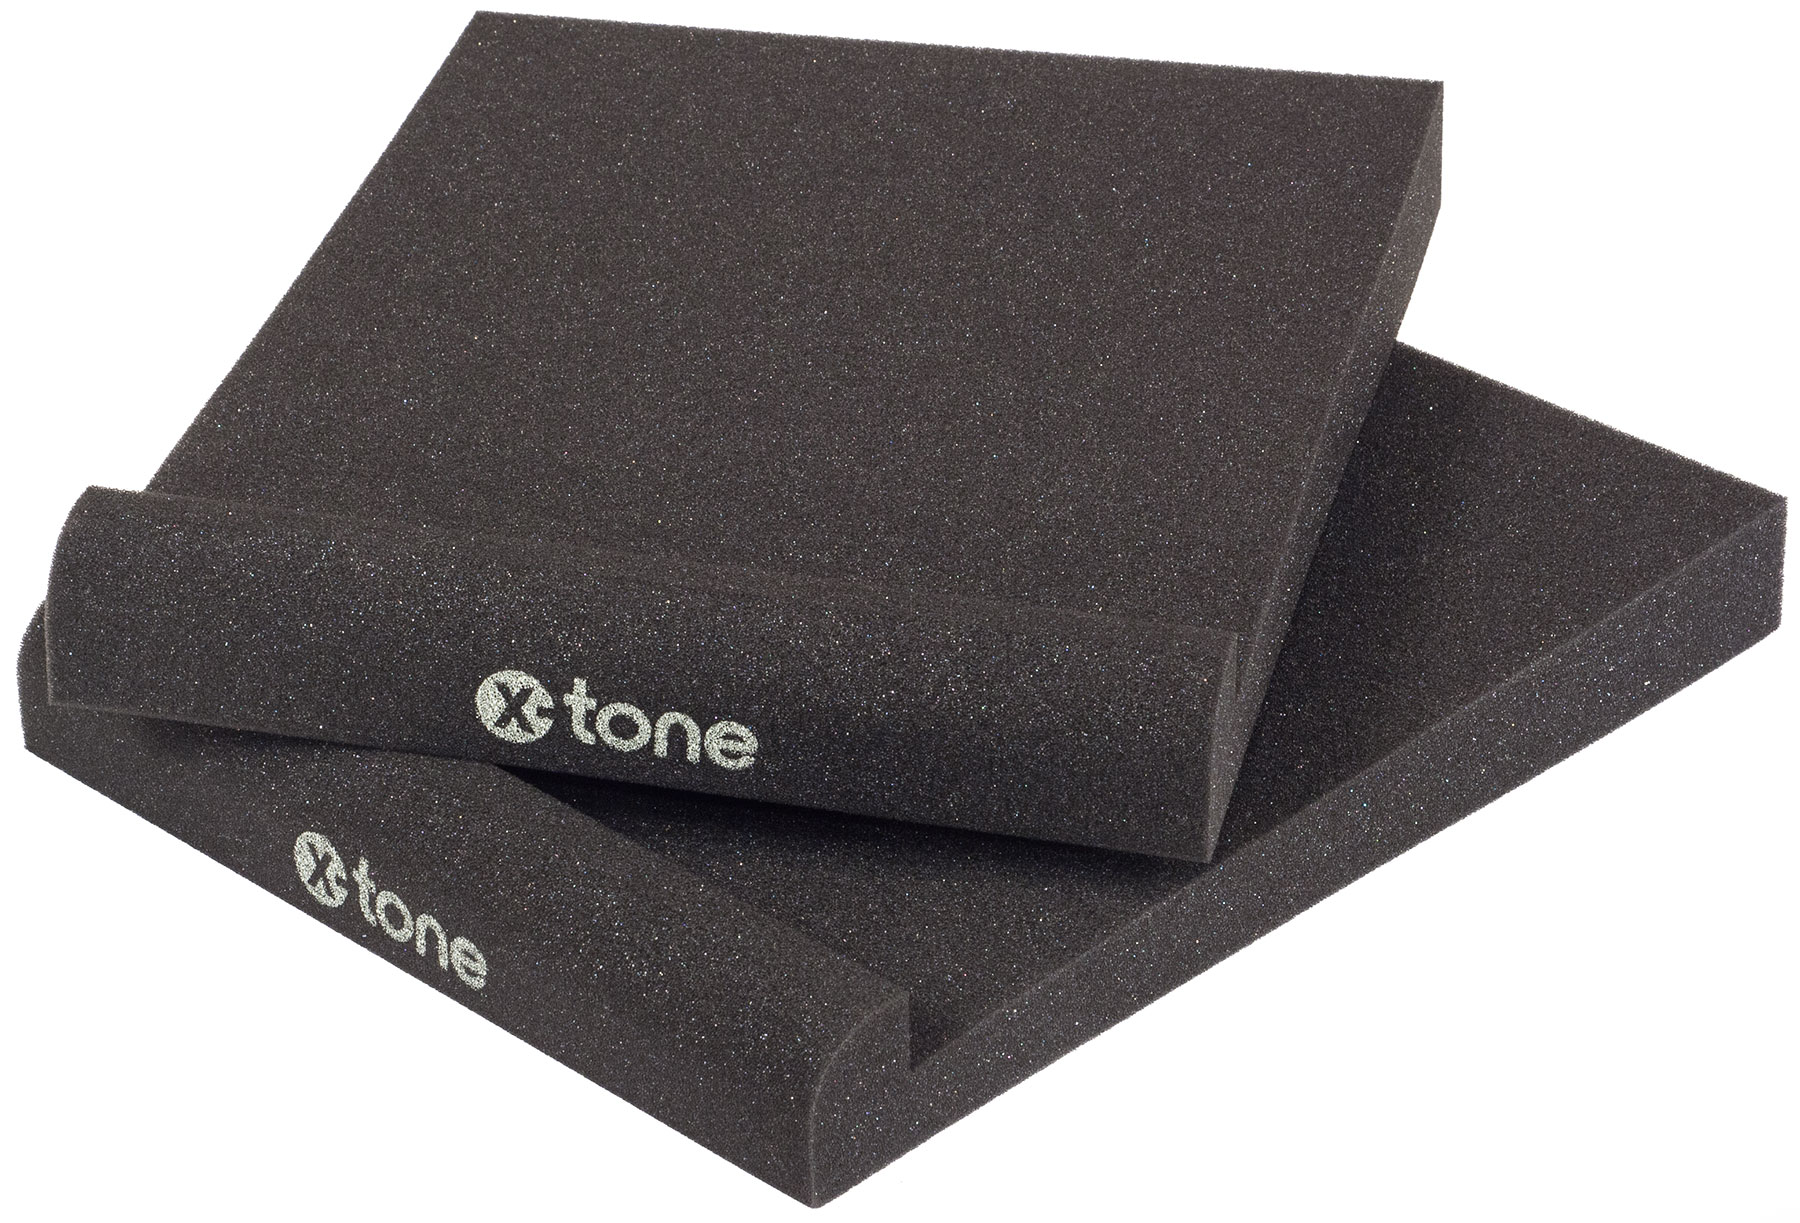 X-tone Xi 7001 Mousse Isolante Moniteurs (paire) - Speakers pads - Variation 1